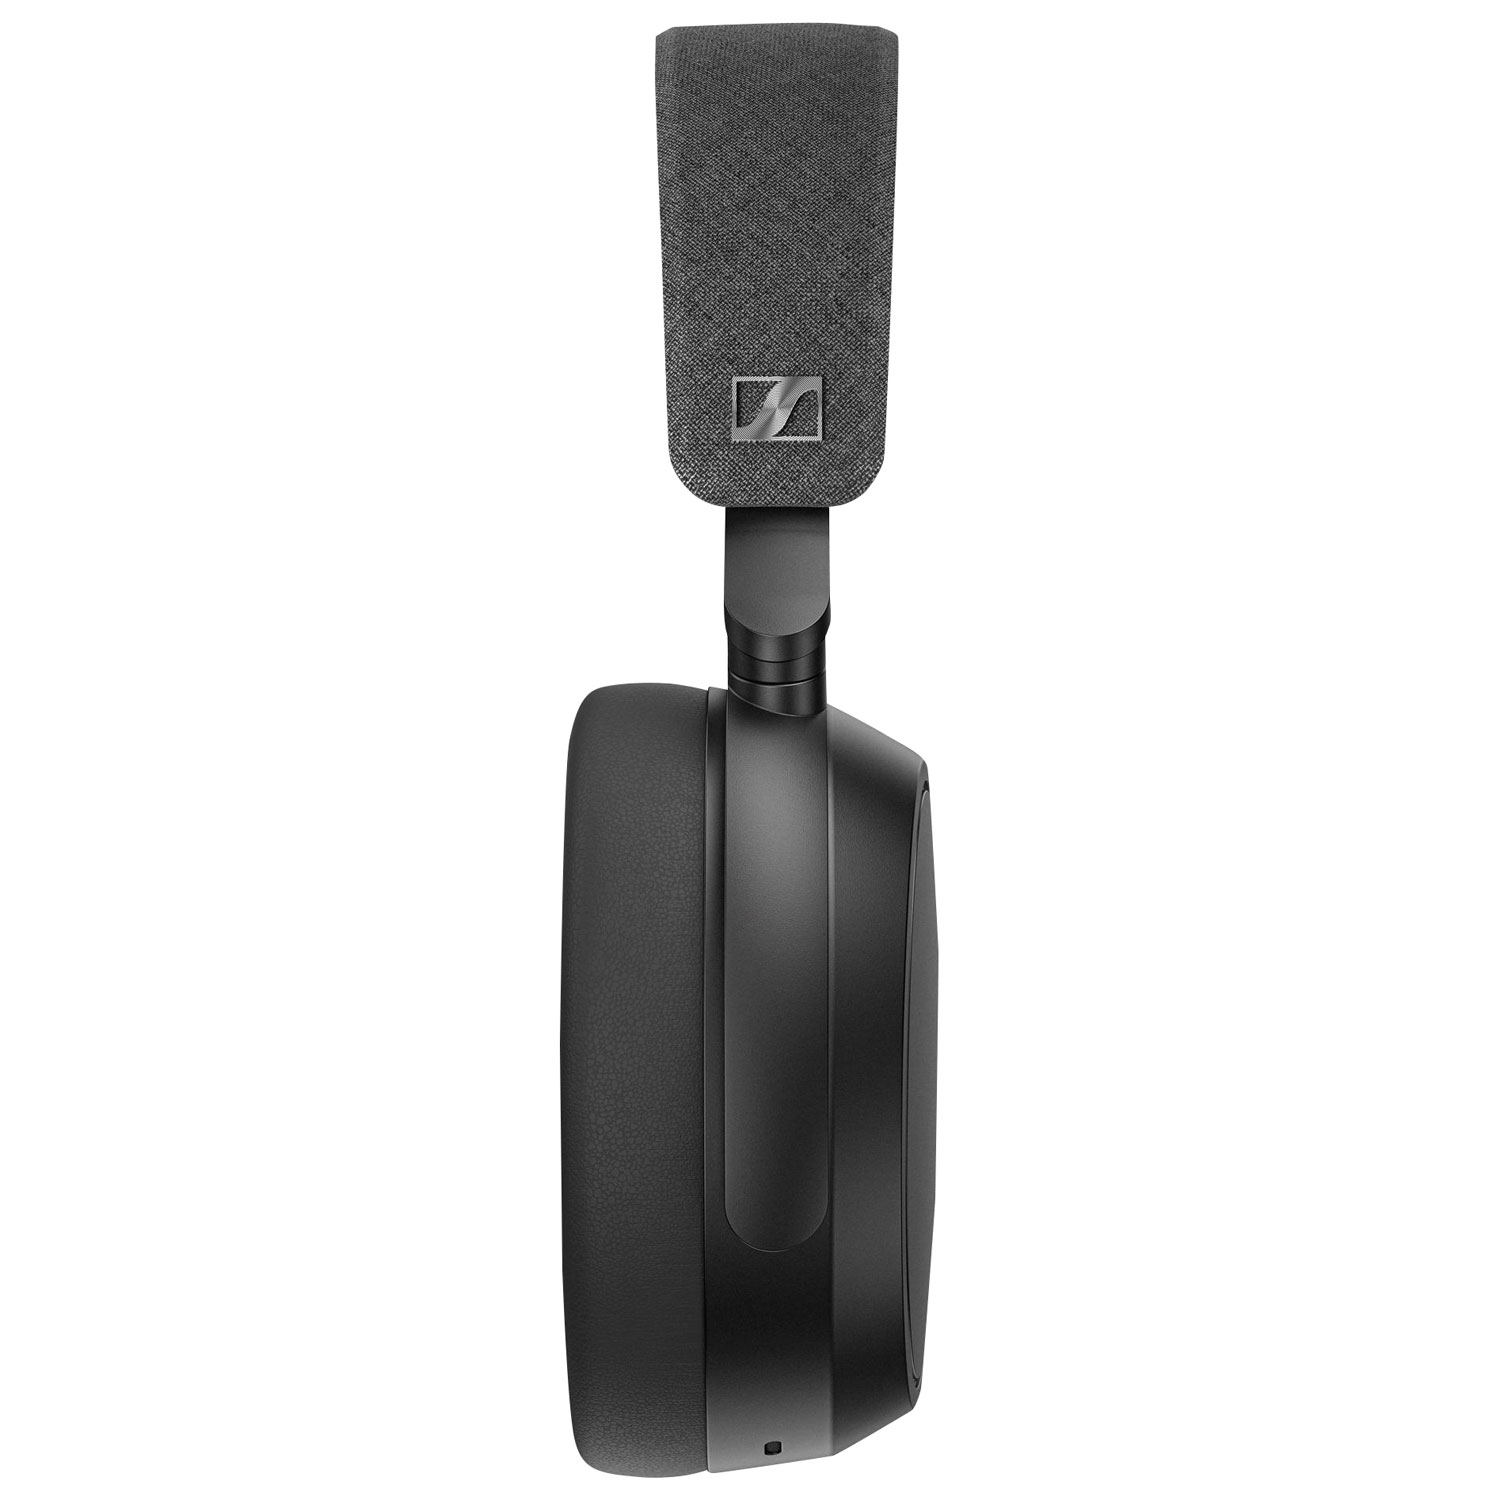 Sennheiser MOMENTUM 4 Over-Ear Noise Cancelling Bluetooth 